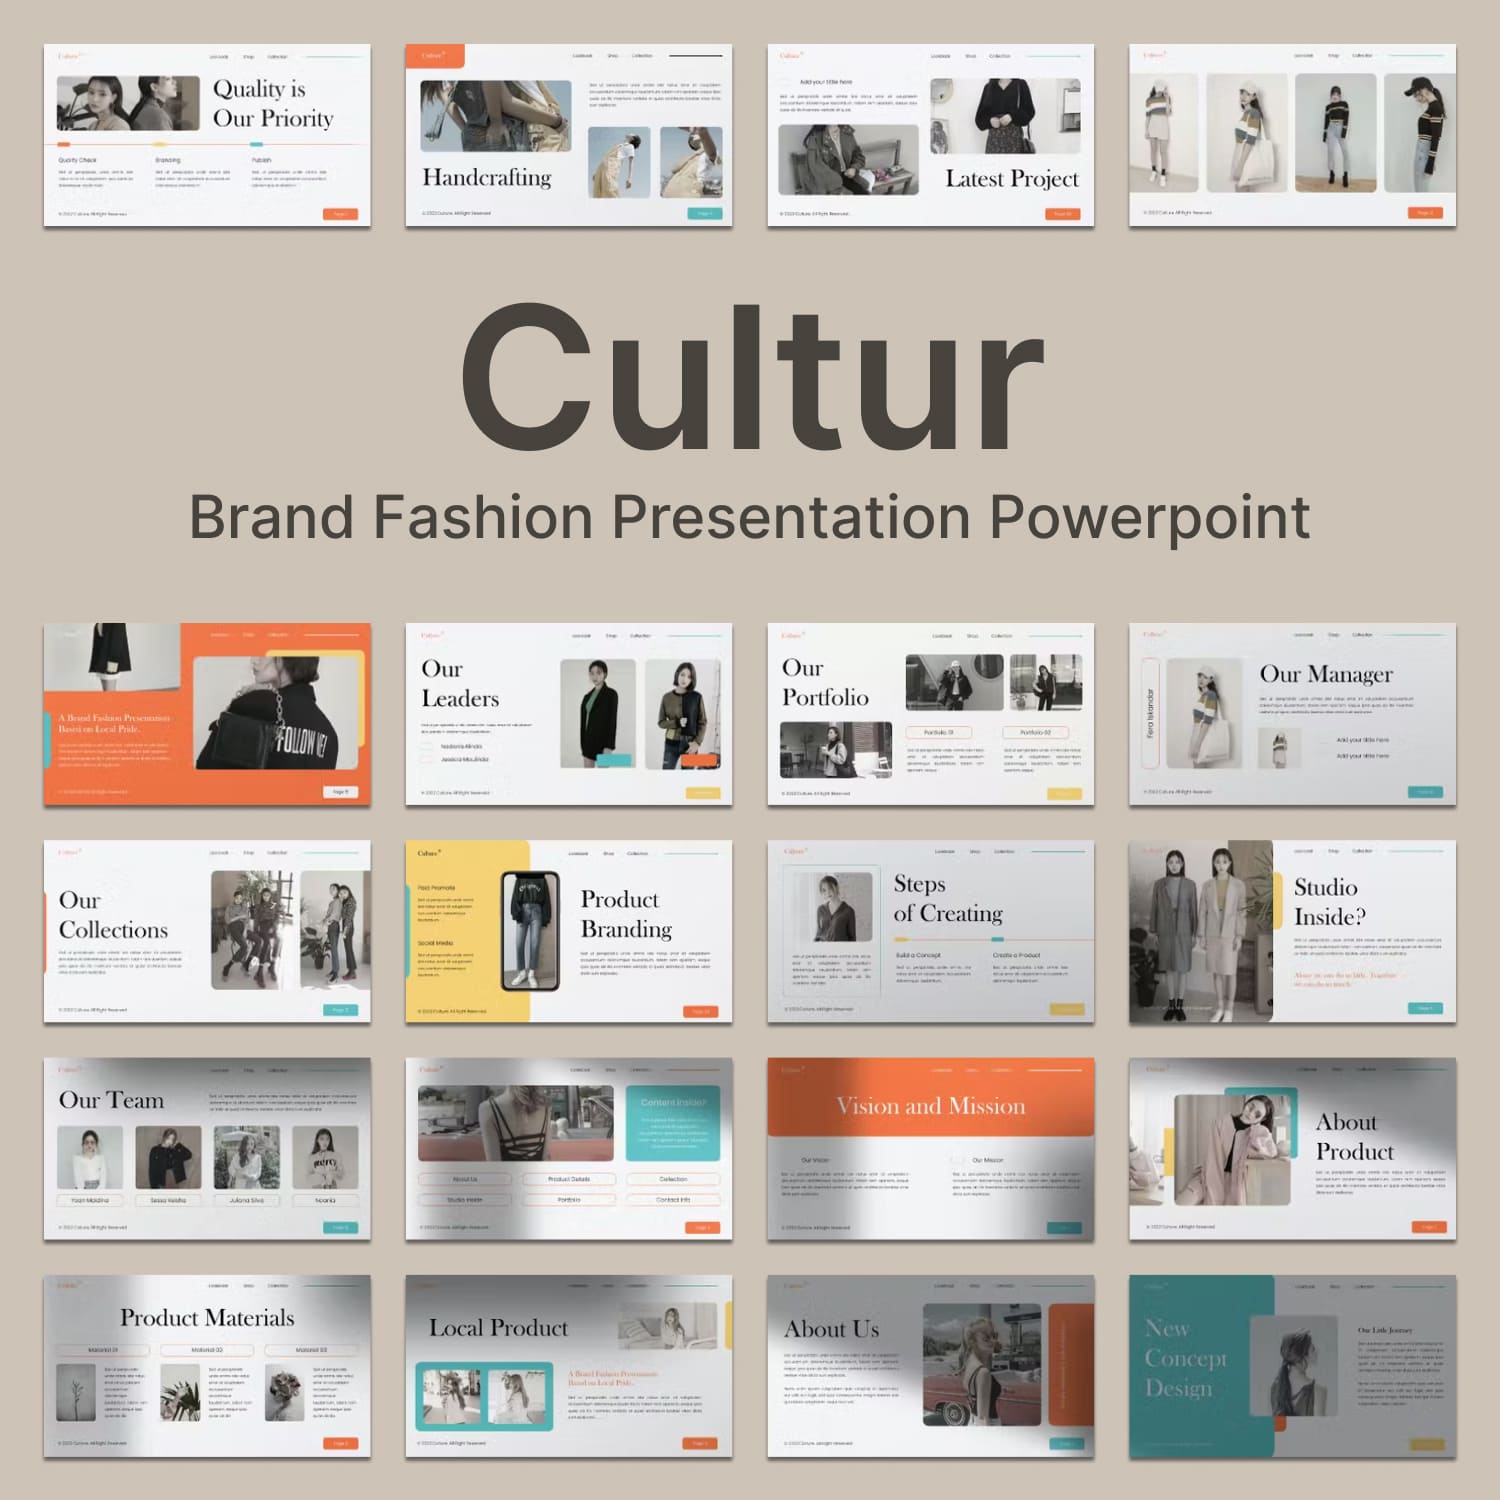 PPT – Top 5 Designer Handbags Brands PowerPoint presentation